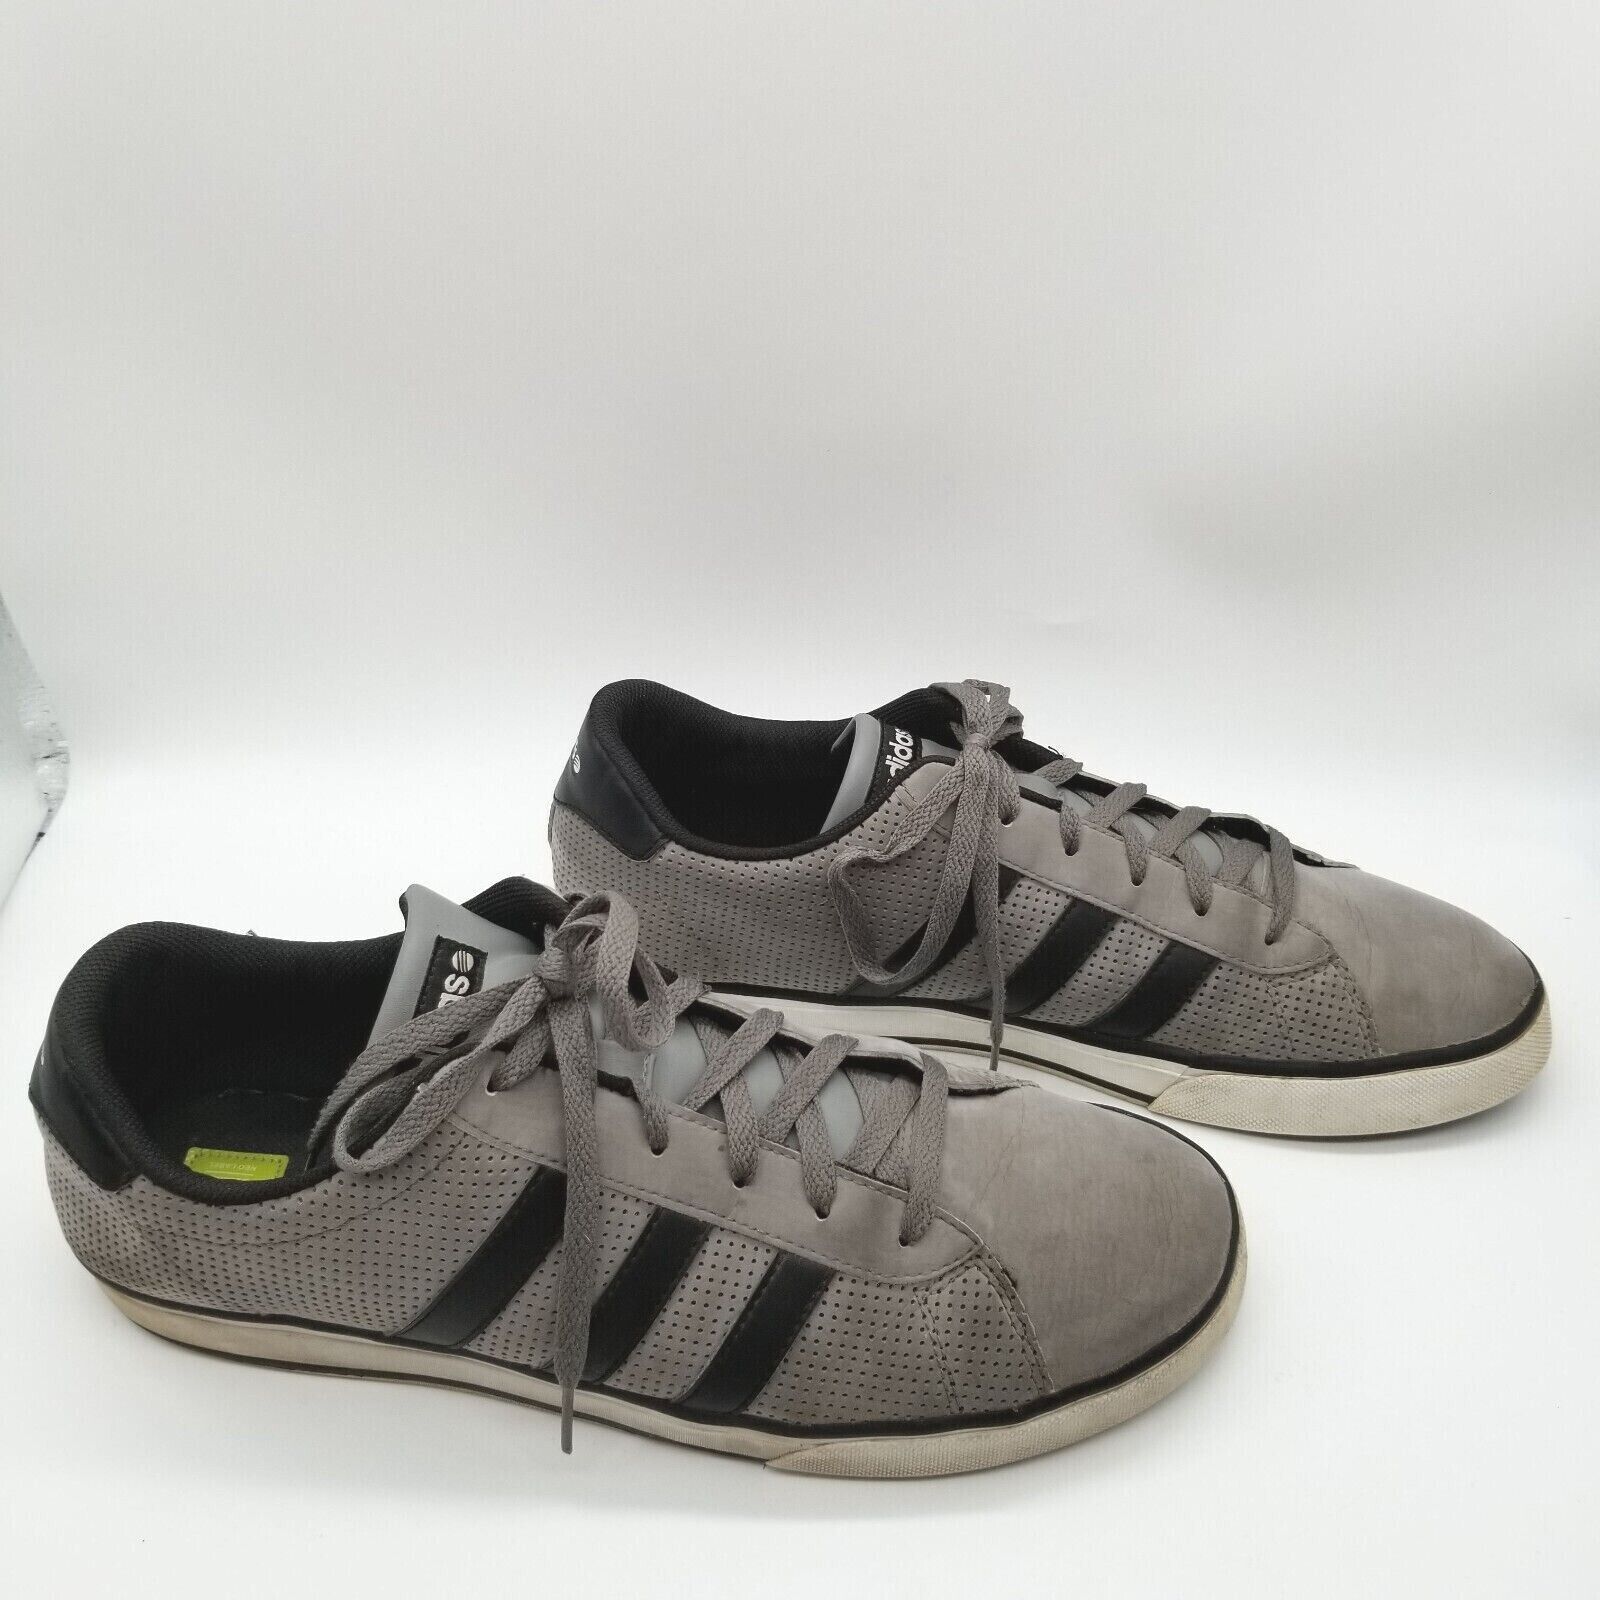 Adidas Mens Neo SE Daily Vulc Lifestyle G31795 Shoes Size | eBay